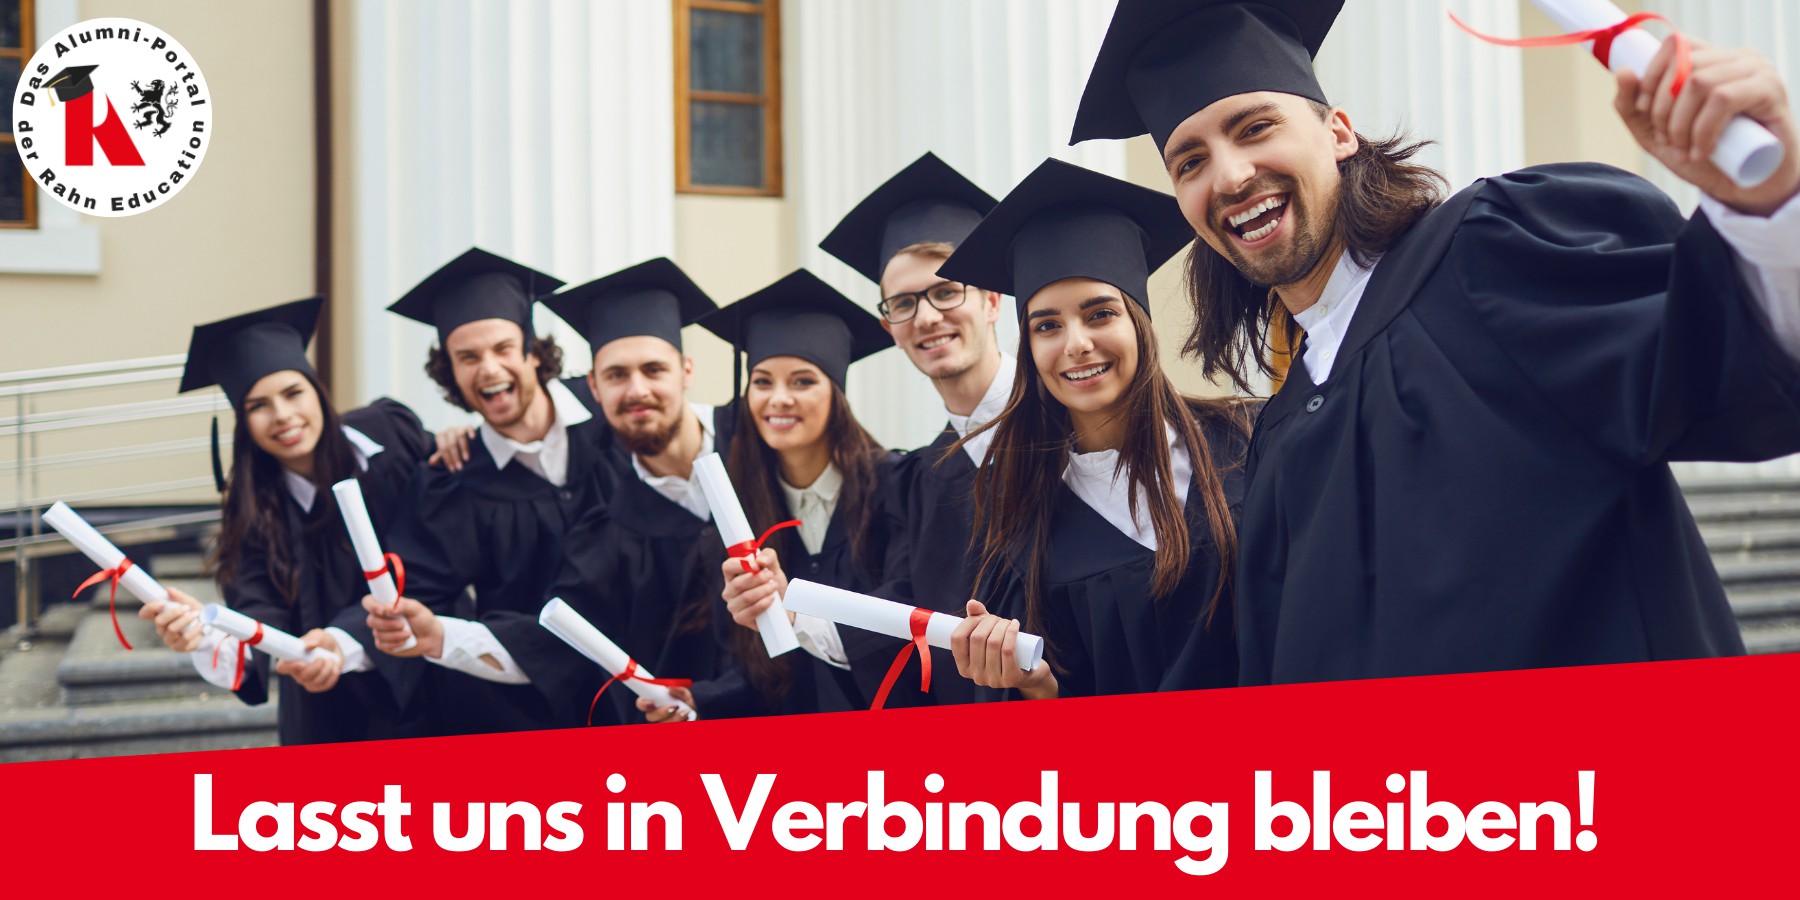 (c) Alumni-rahn-education.de